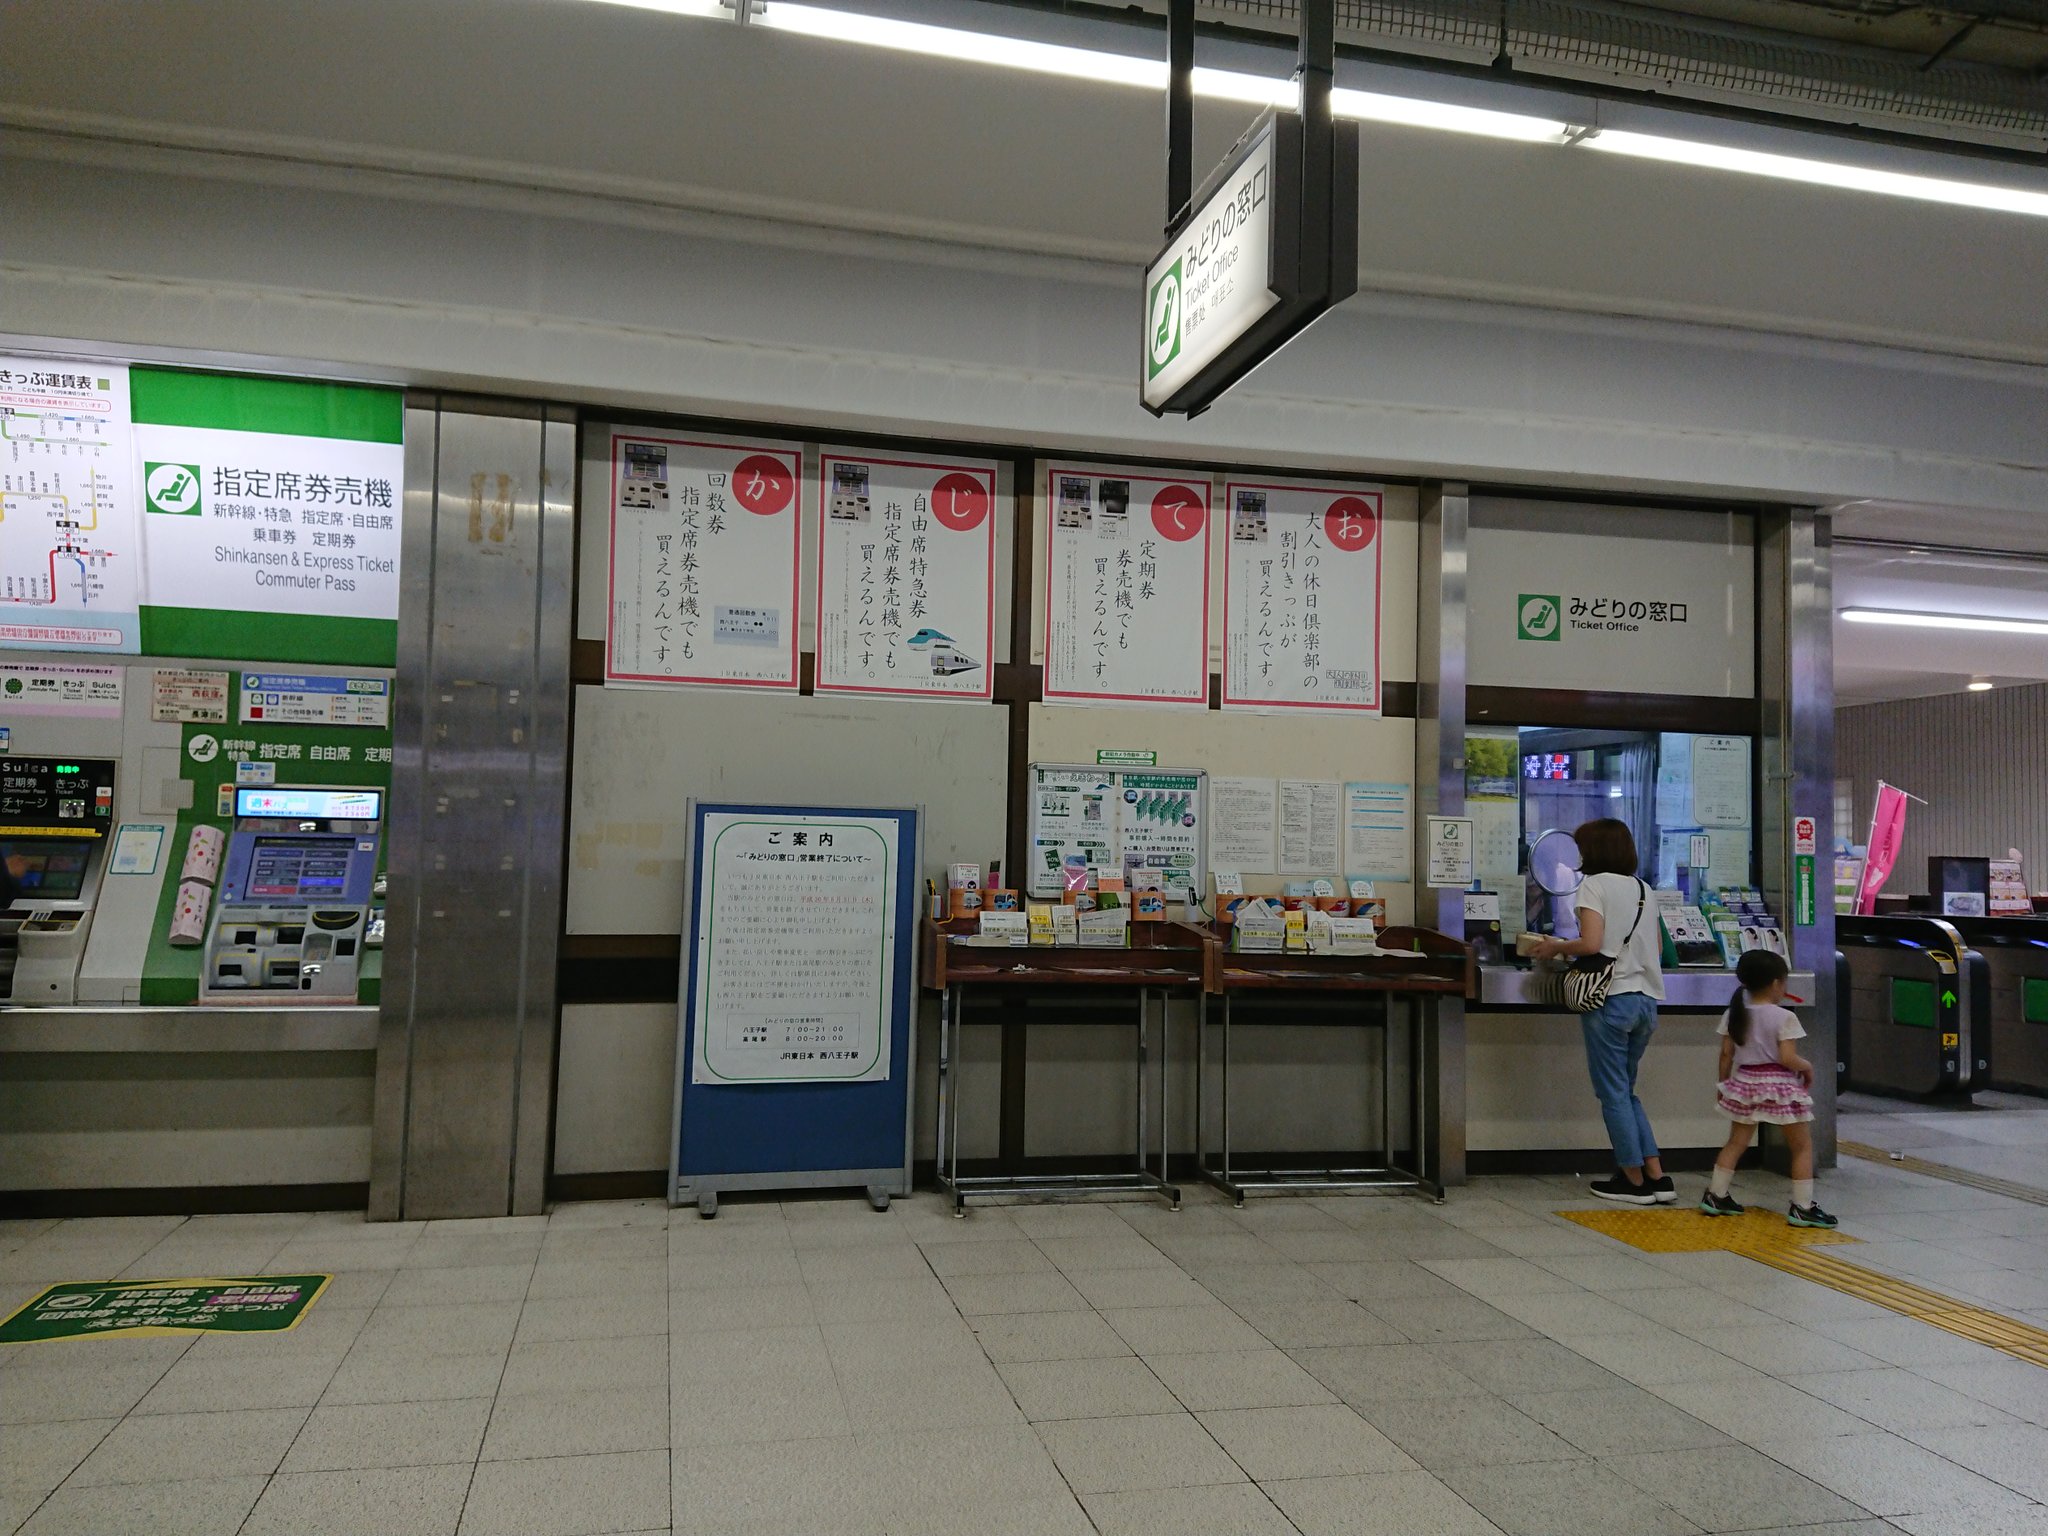 imadegawa075 on Twitter "今月末でみどりの窓口が閉鎖になる西八王子へ。中野～高尾間の駅では